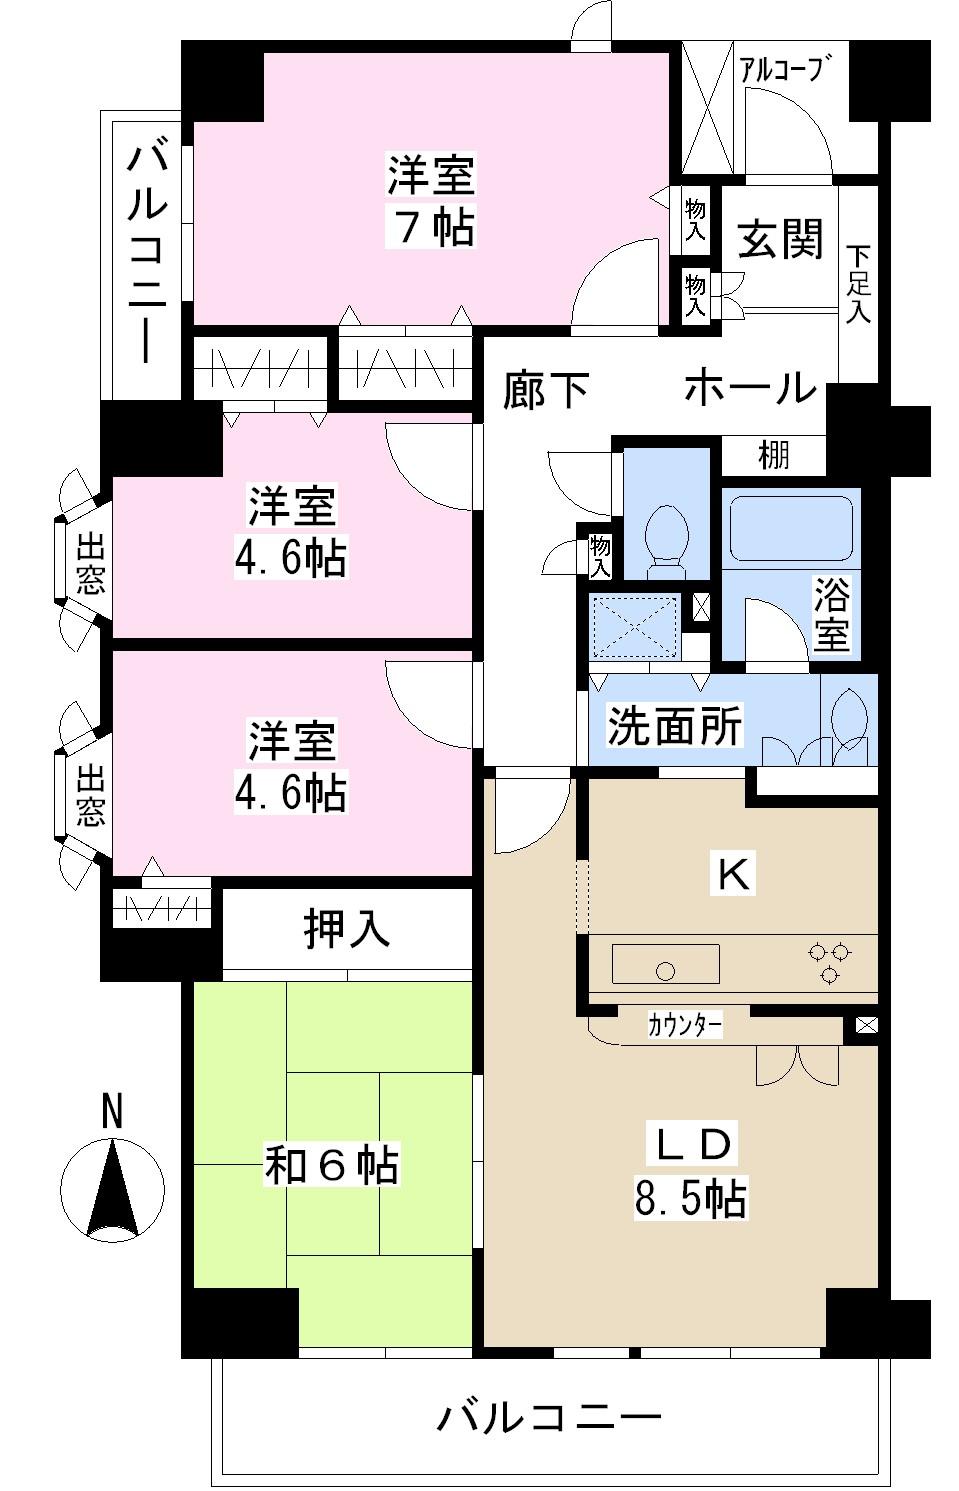 Floor plan. 4LK, Price 18,800,000 yen, Occupied area 80.14 sq m , Balcony area 9.97 sq m